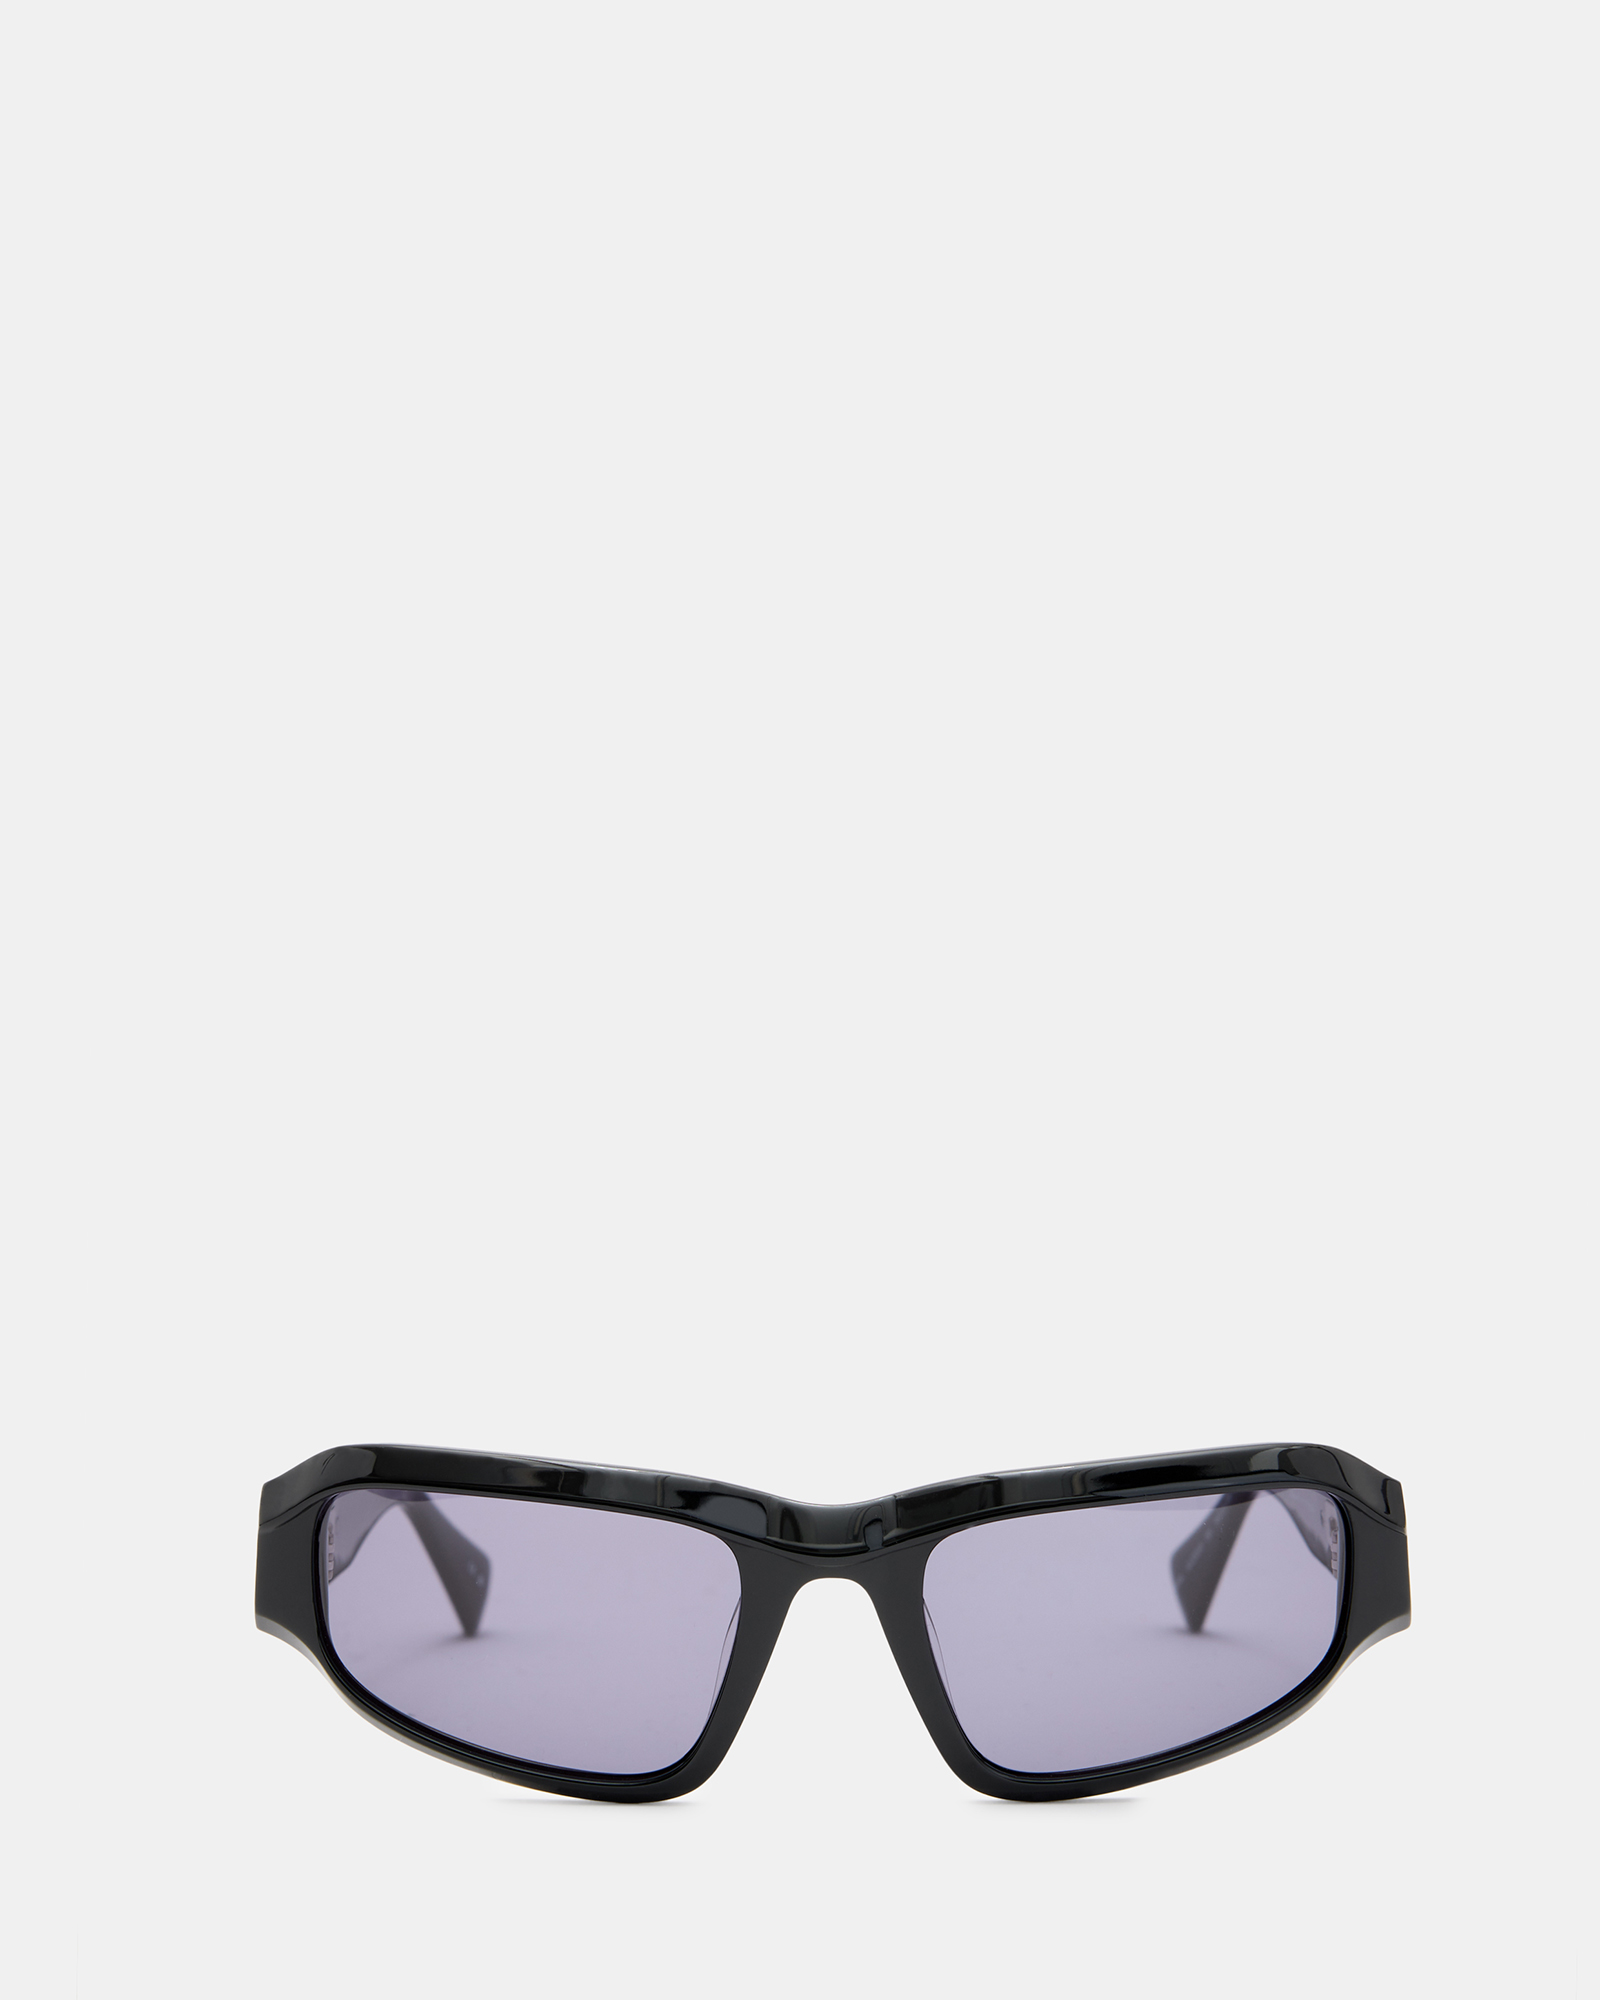 AllSaints Anderson Wrap Around Sunglasses,, Gloss Black, Size: One Size